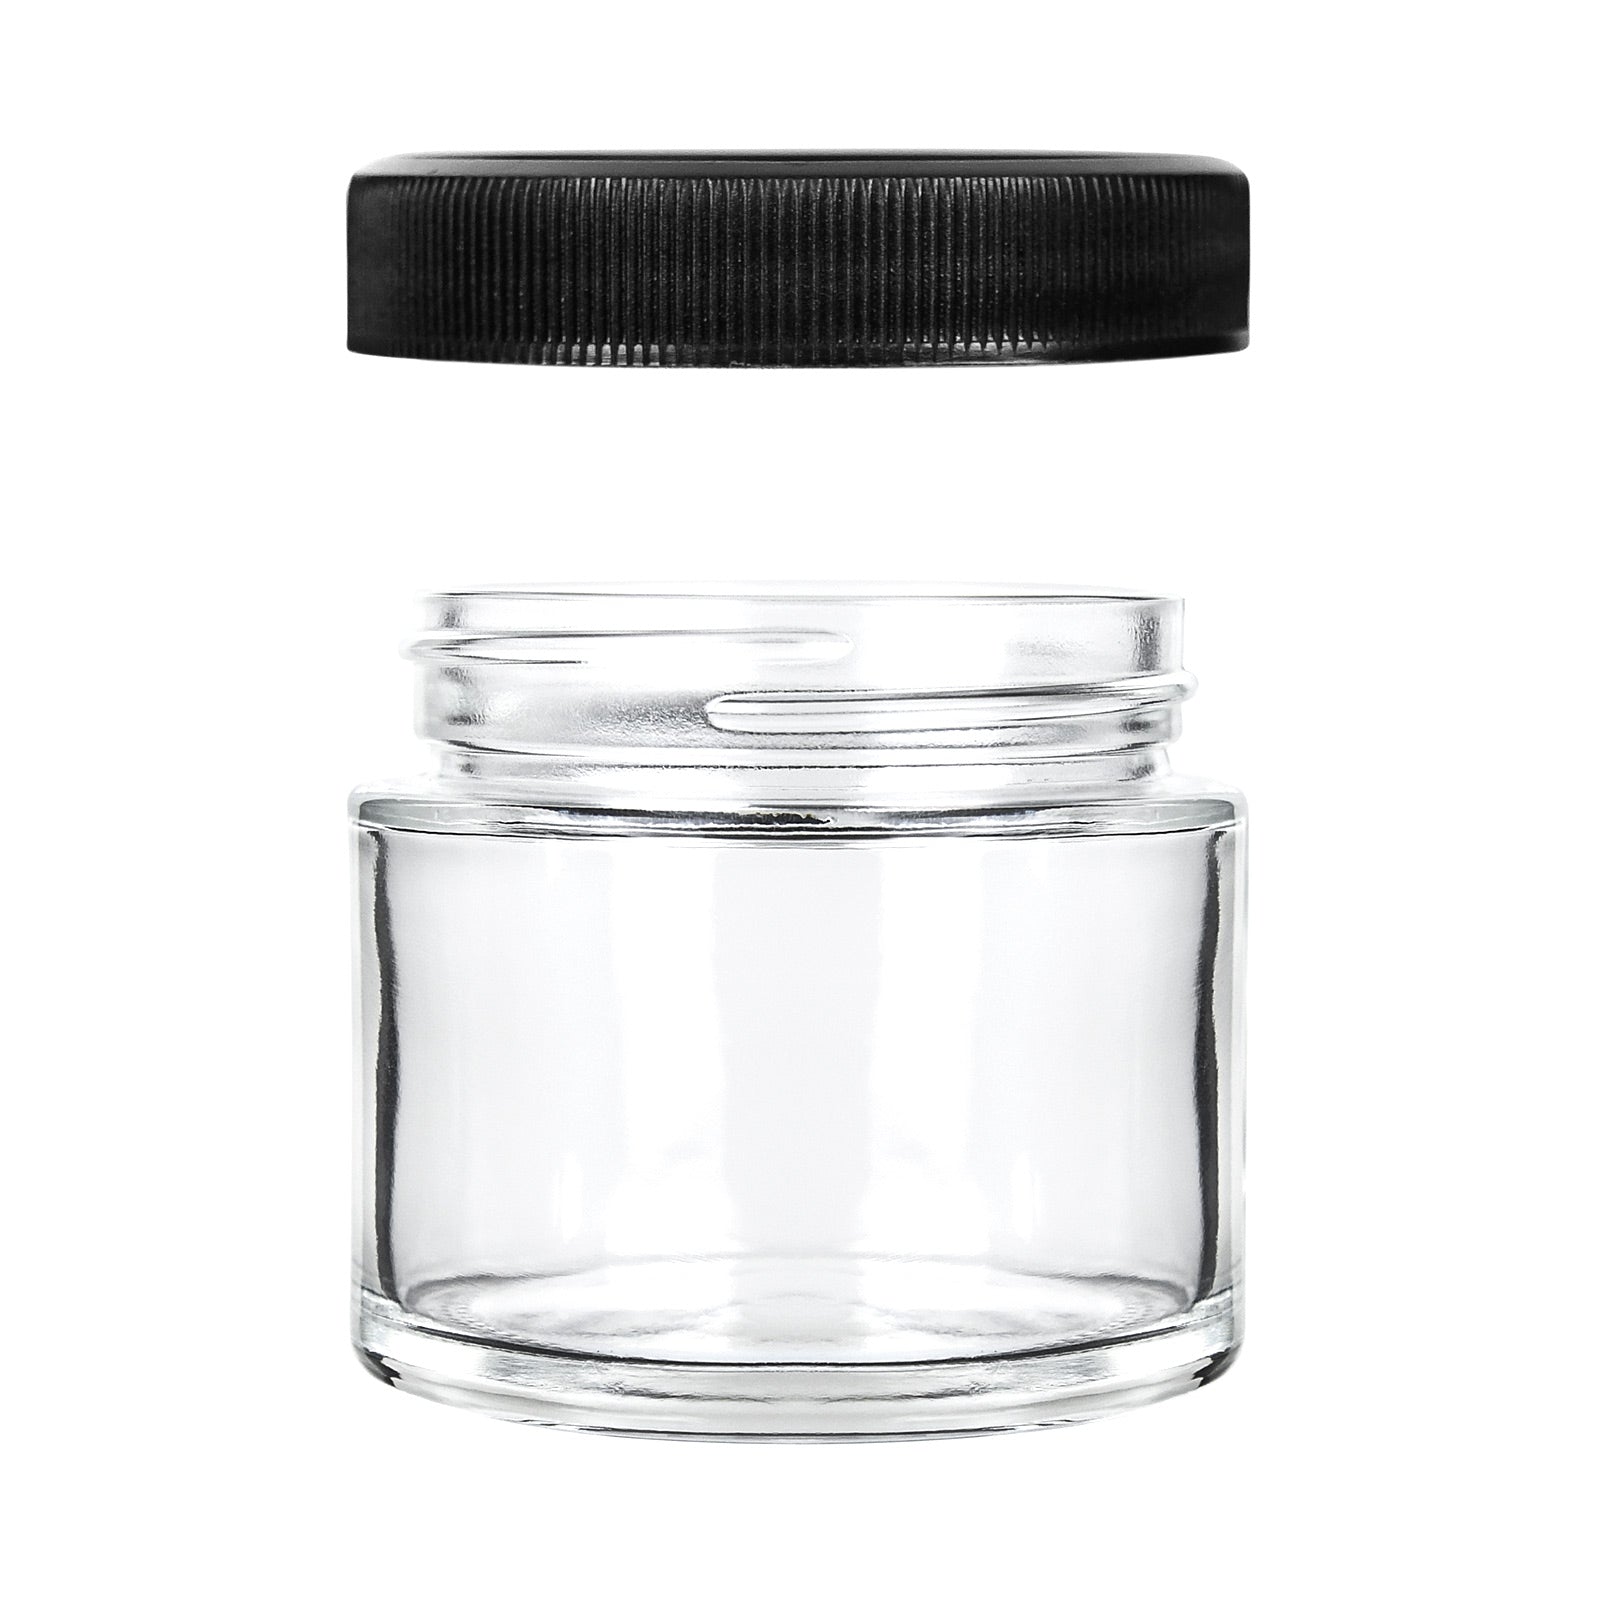 Orii 3oz Jar/Spice Jars with Black Lids (5 Pieces)